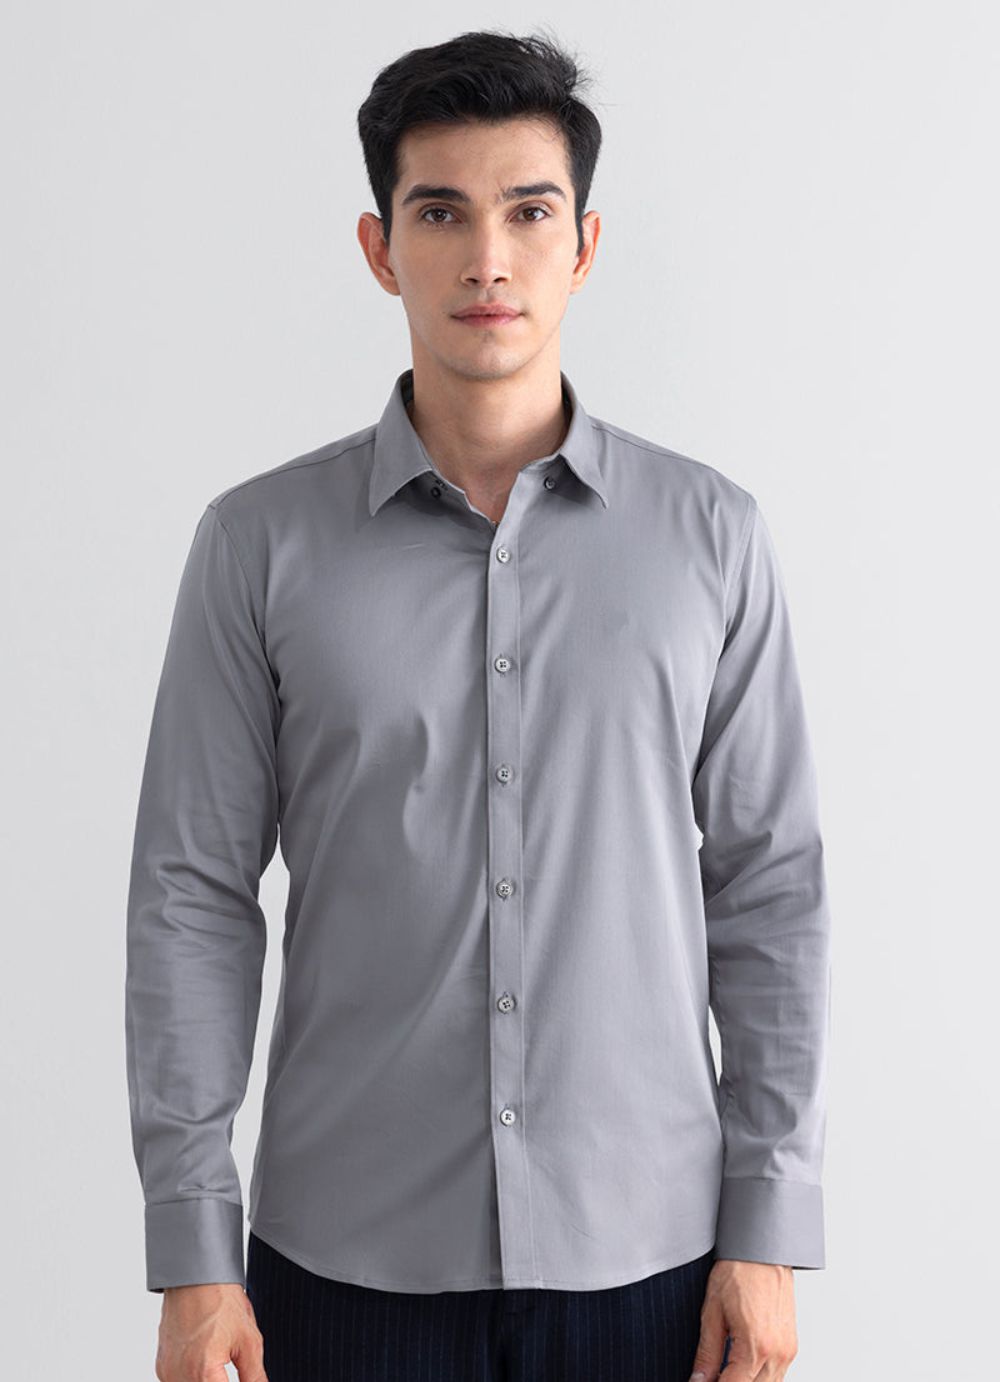 Grey plain formal shirt for men